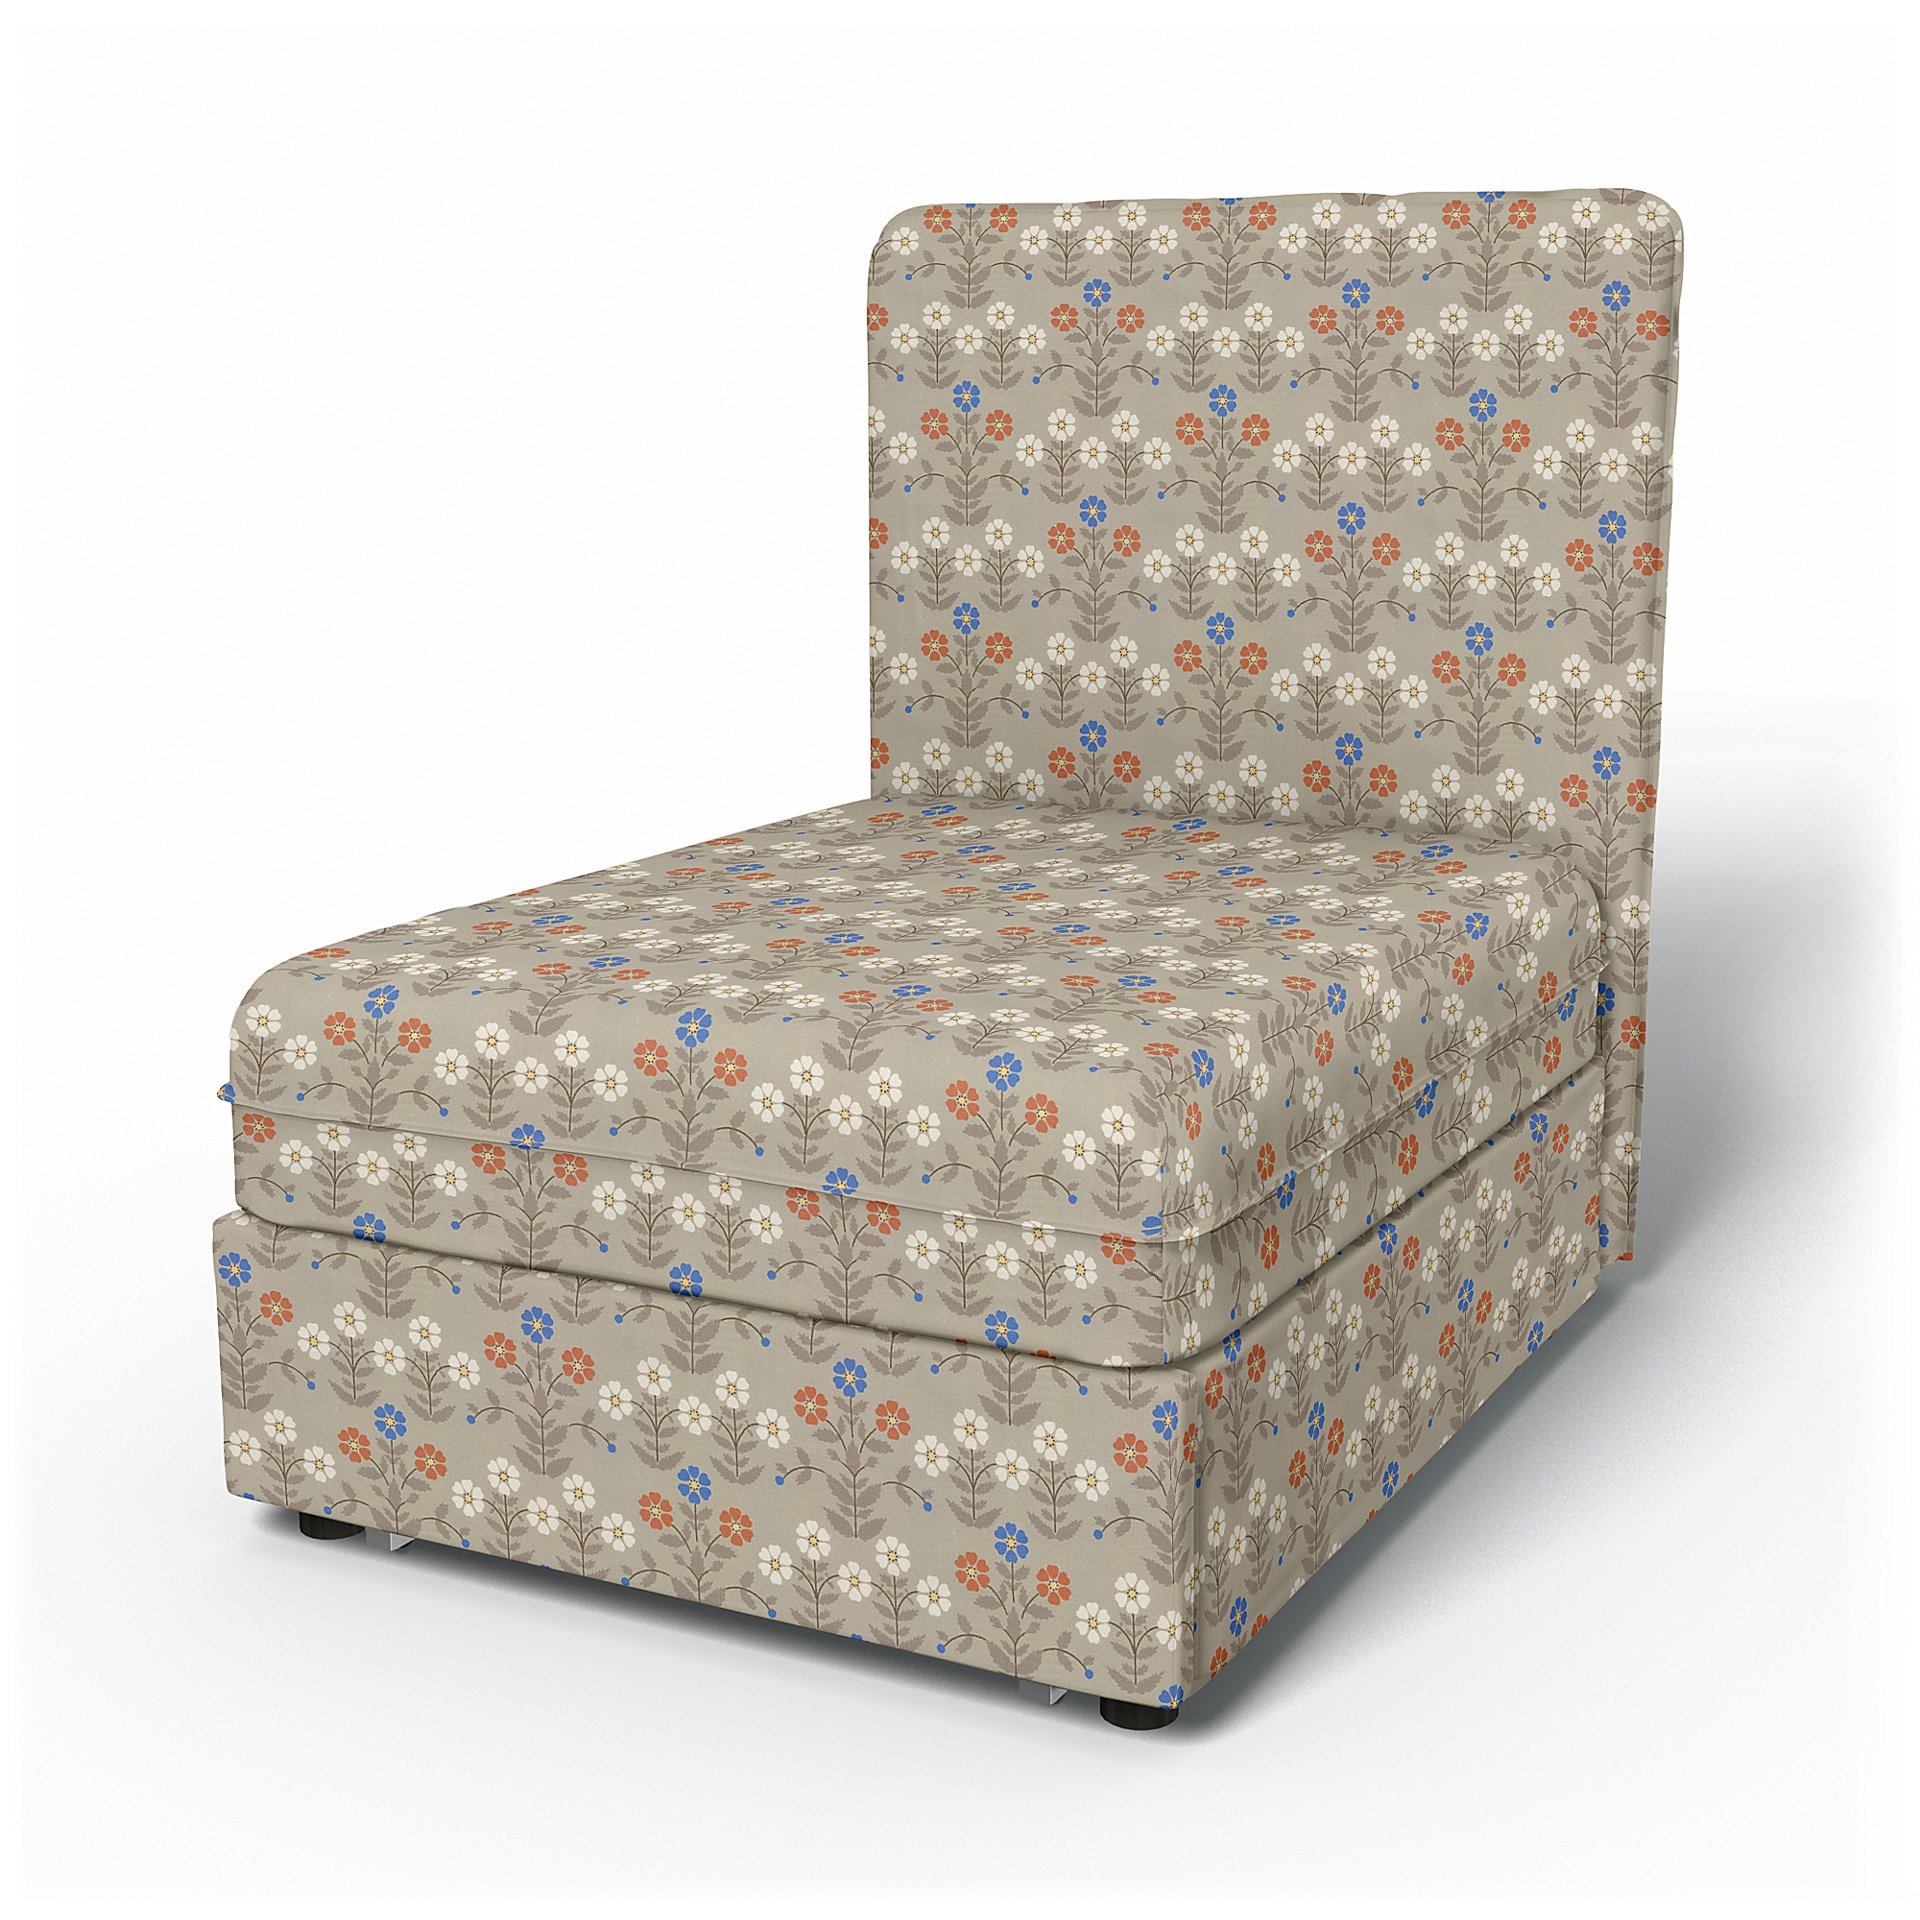 IKEA - Vallentuna Seat Module with High Back Sofa Bed Cover (80x100x46cm), Sippor Blue/Orange, BEMZ 